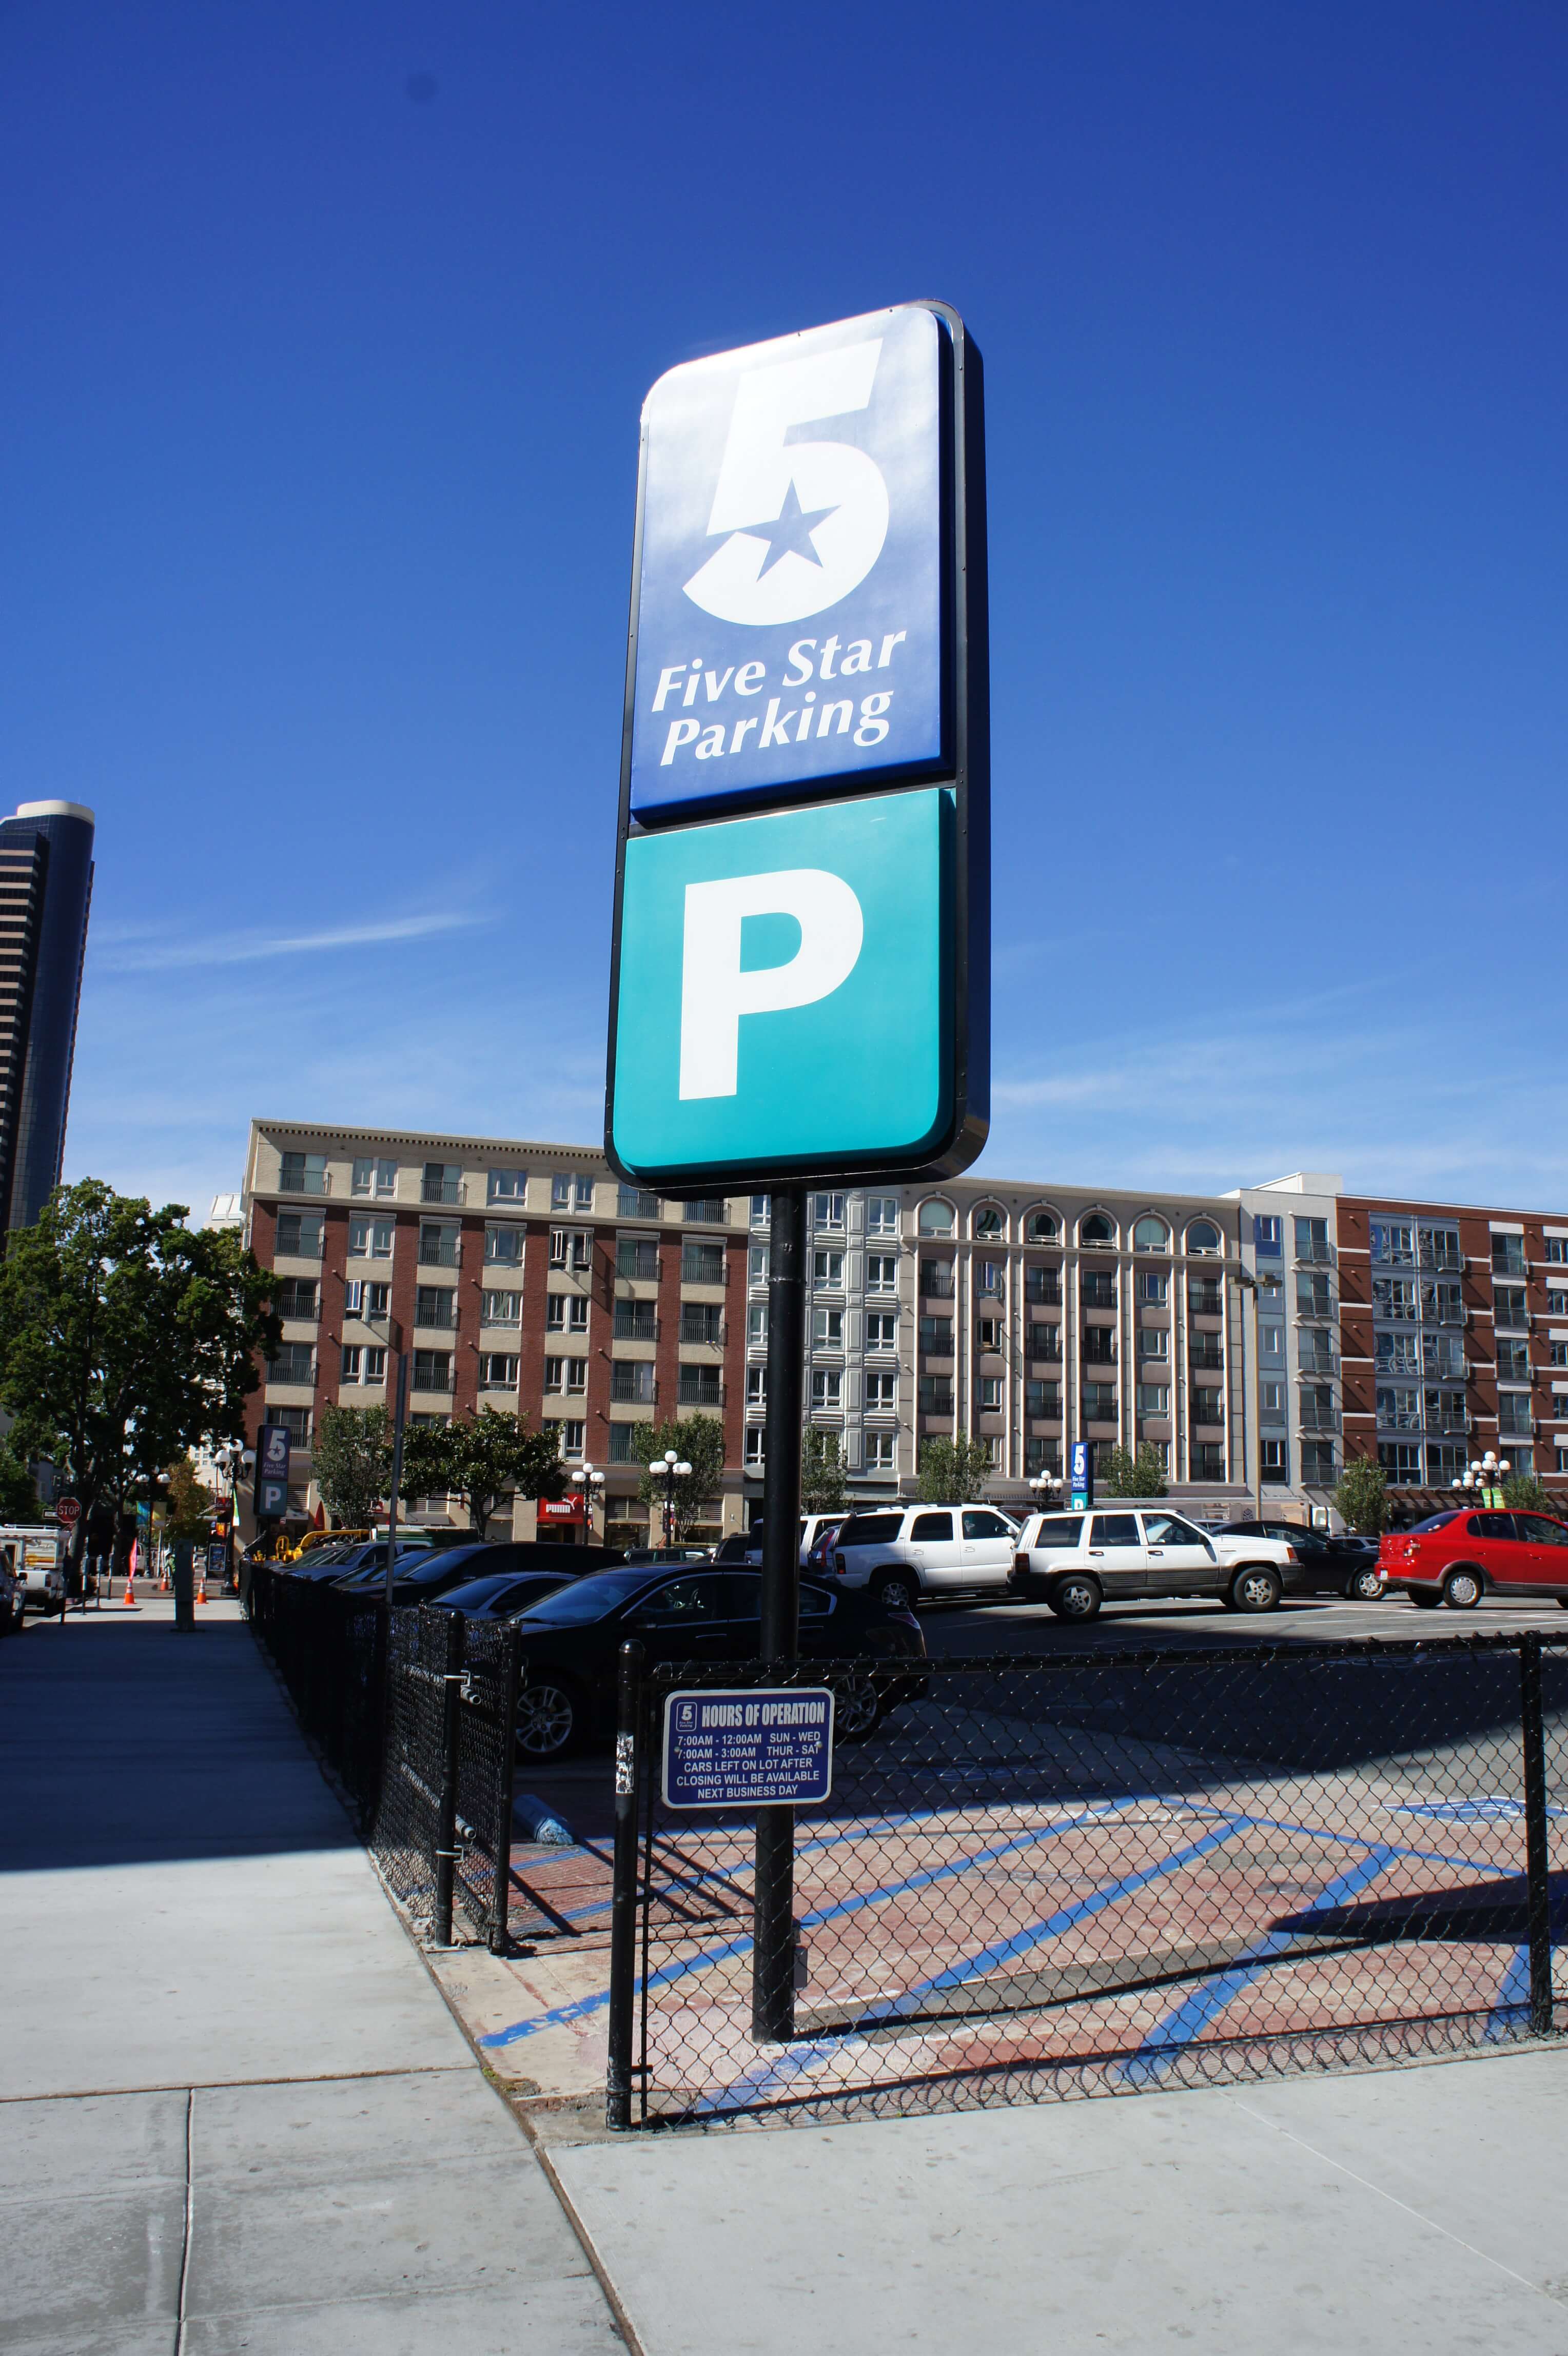 Downtown San Diego has New Parking Meters